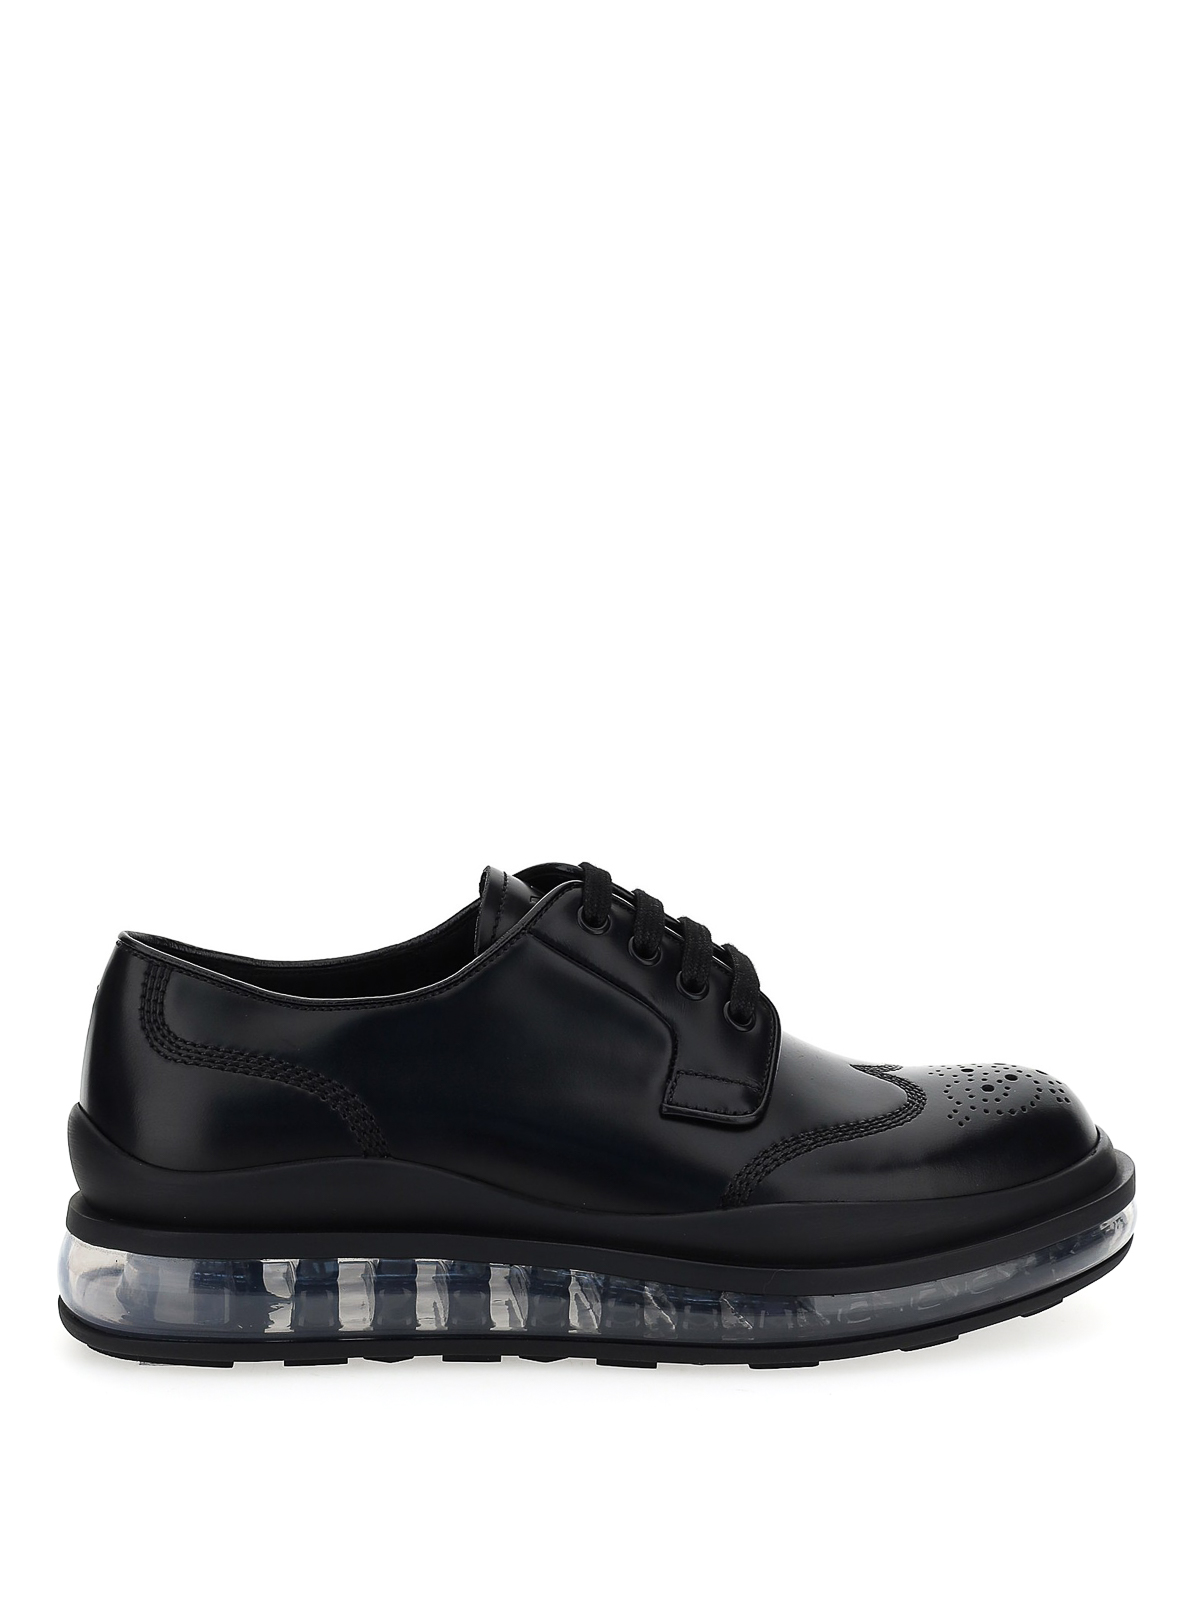 Lace-ups shoes Prada - Sneaker sole derby shoes - 2EG299B4LF0002